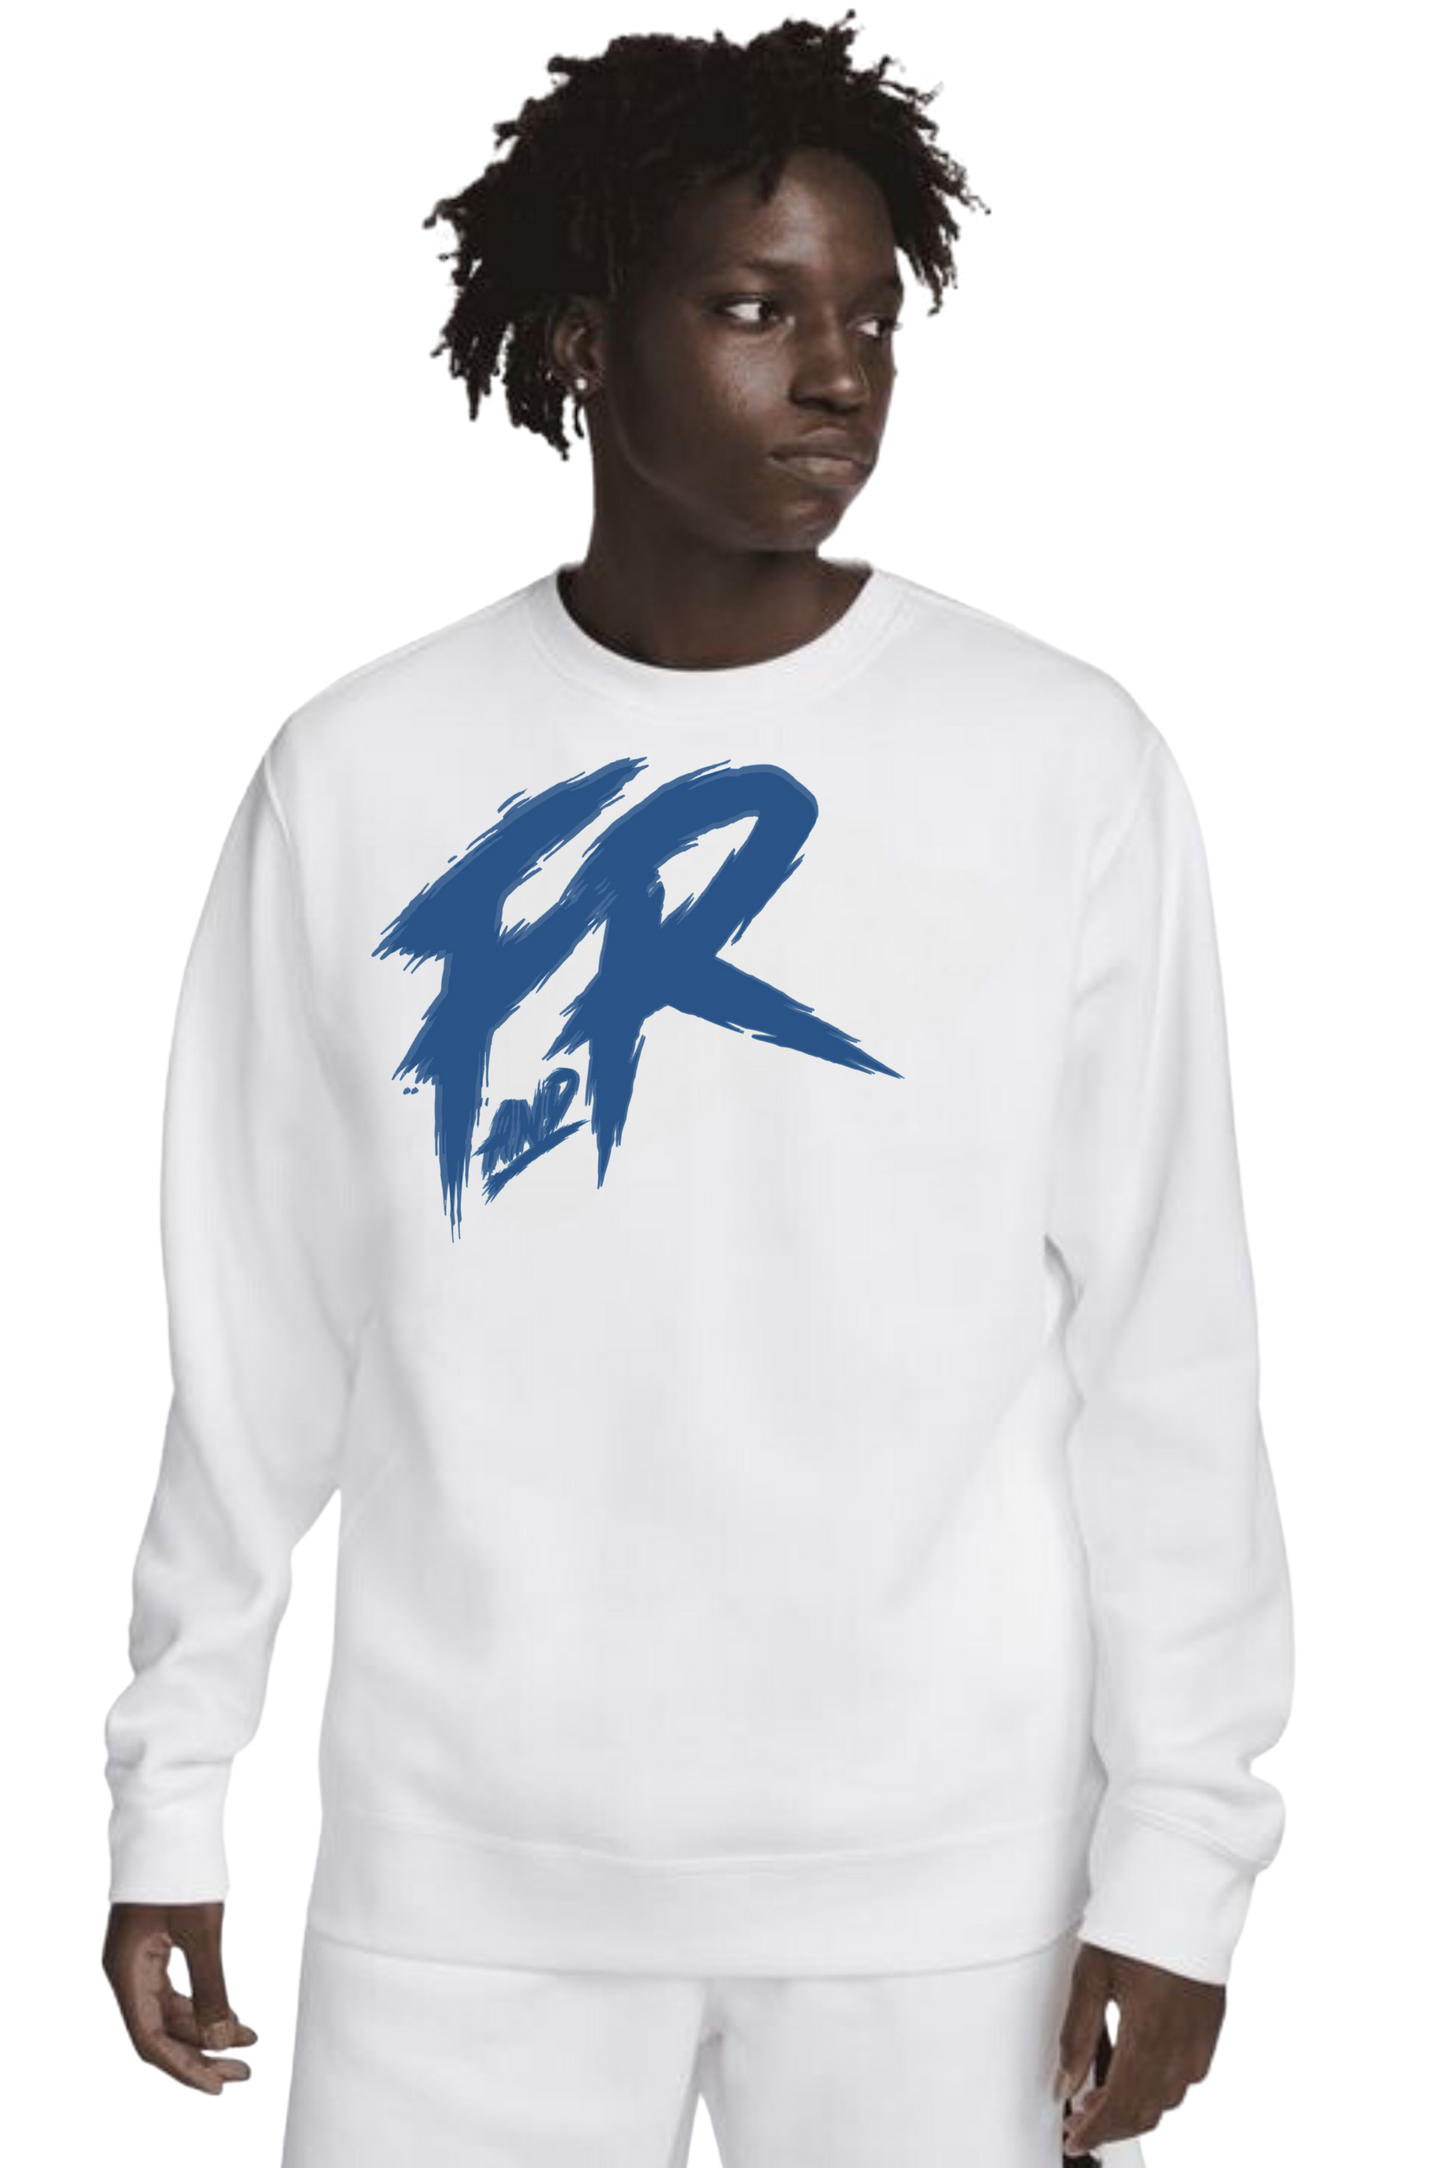 F&R 4Life Sweatshirt Collection